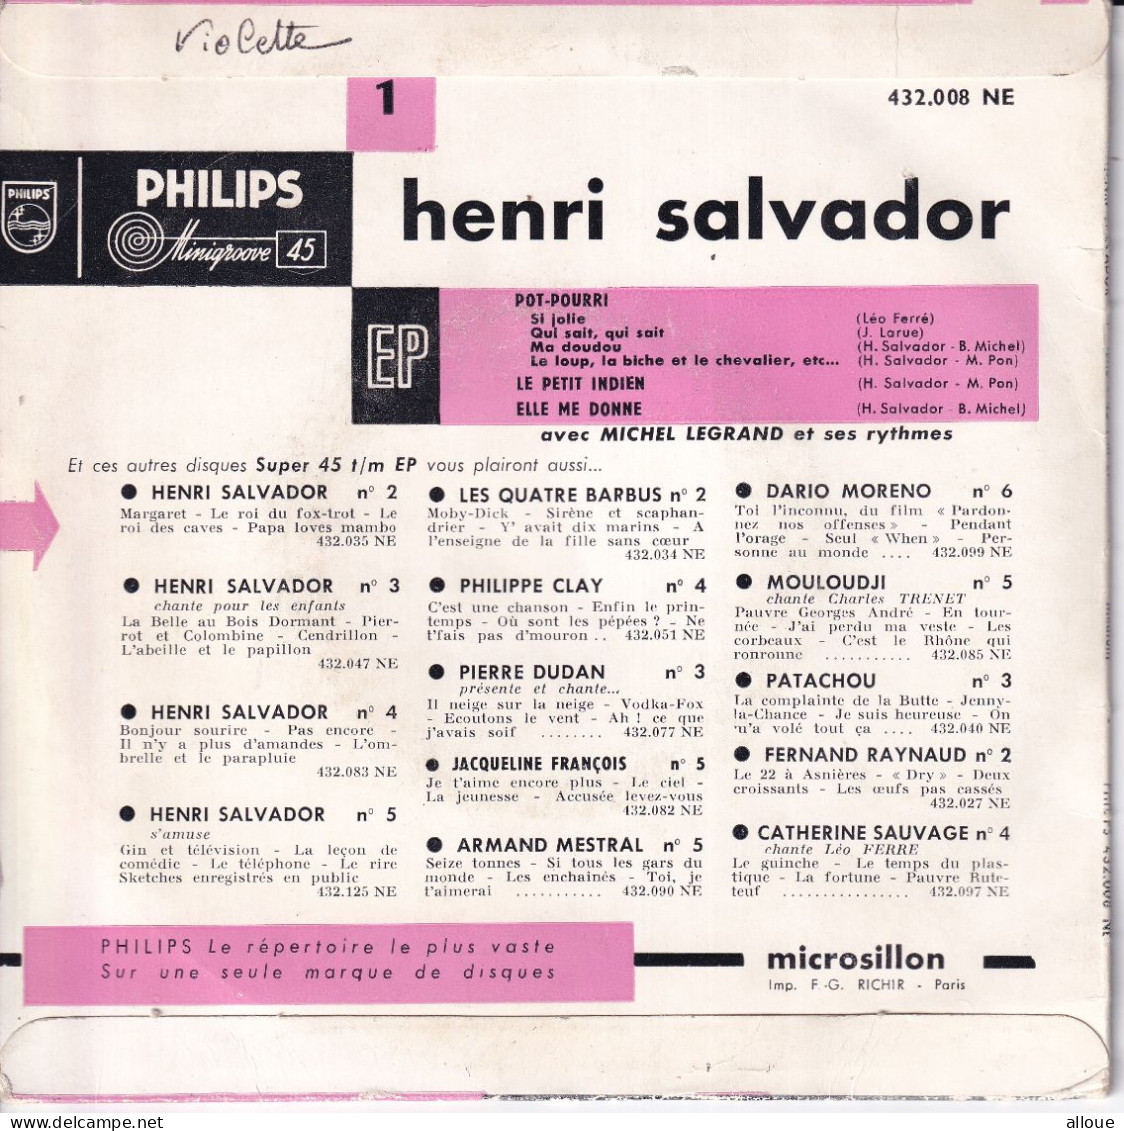 HENRI SALVADOR 1 - FR EP - POT-POURRI + 3 - Other - French Music